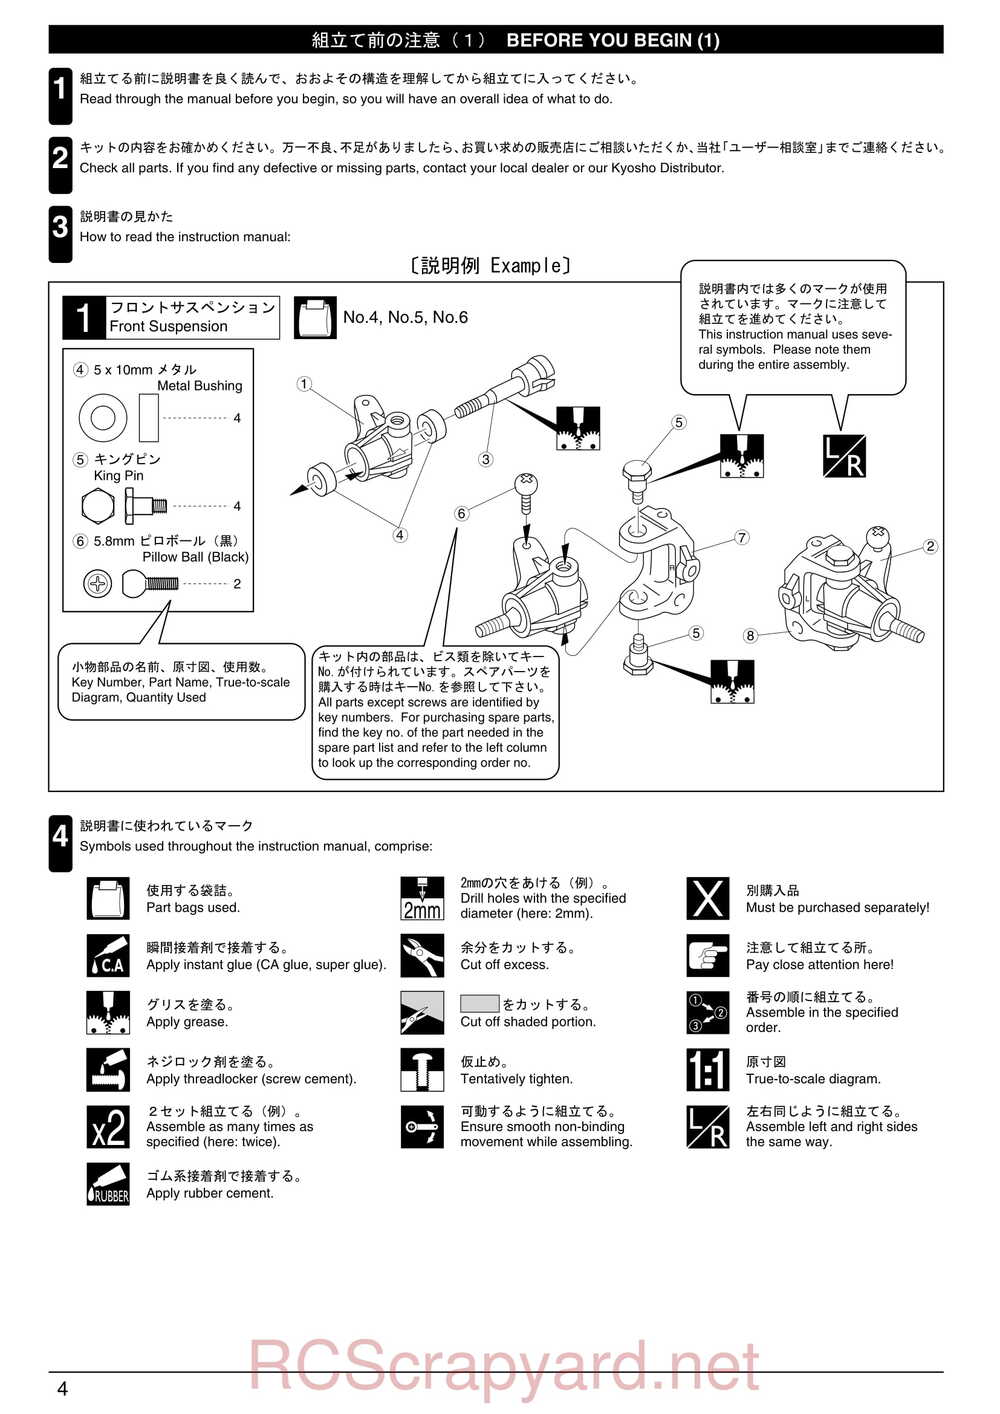 Kyosho - 30521b - Twin-Force - Manual - Page 04